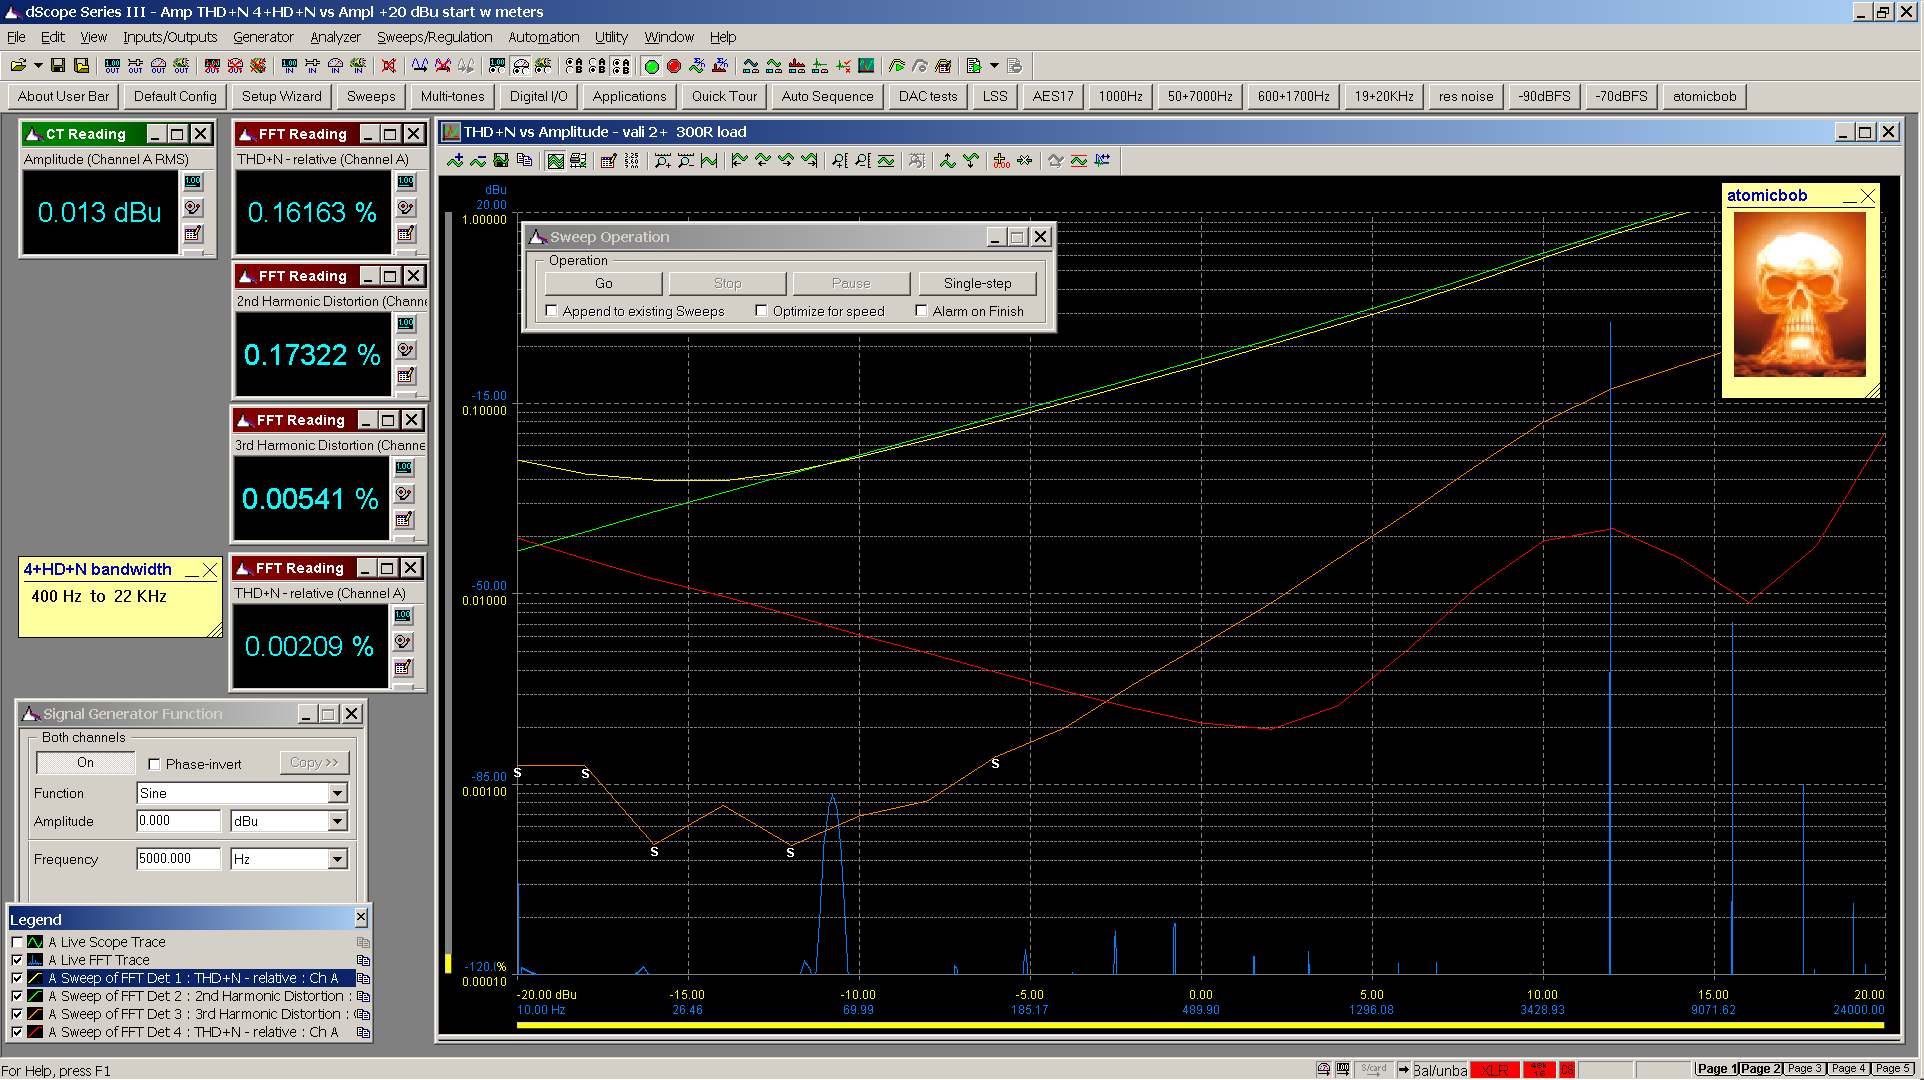 09 202200511-3 vali 2+ 5000 Hz distortion vs amp - 0 dB gain 4+HD+N 400Hz-20KHz - 300R.png